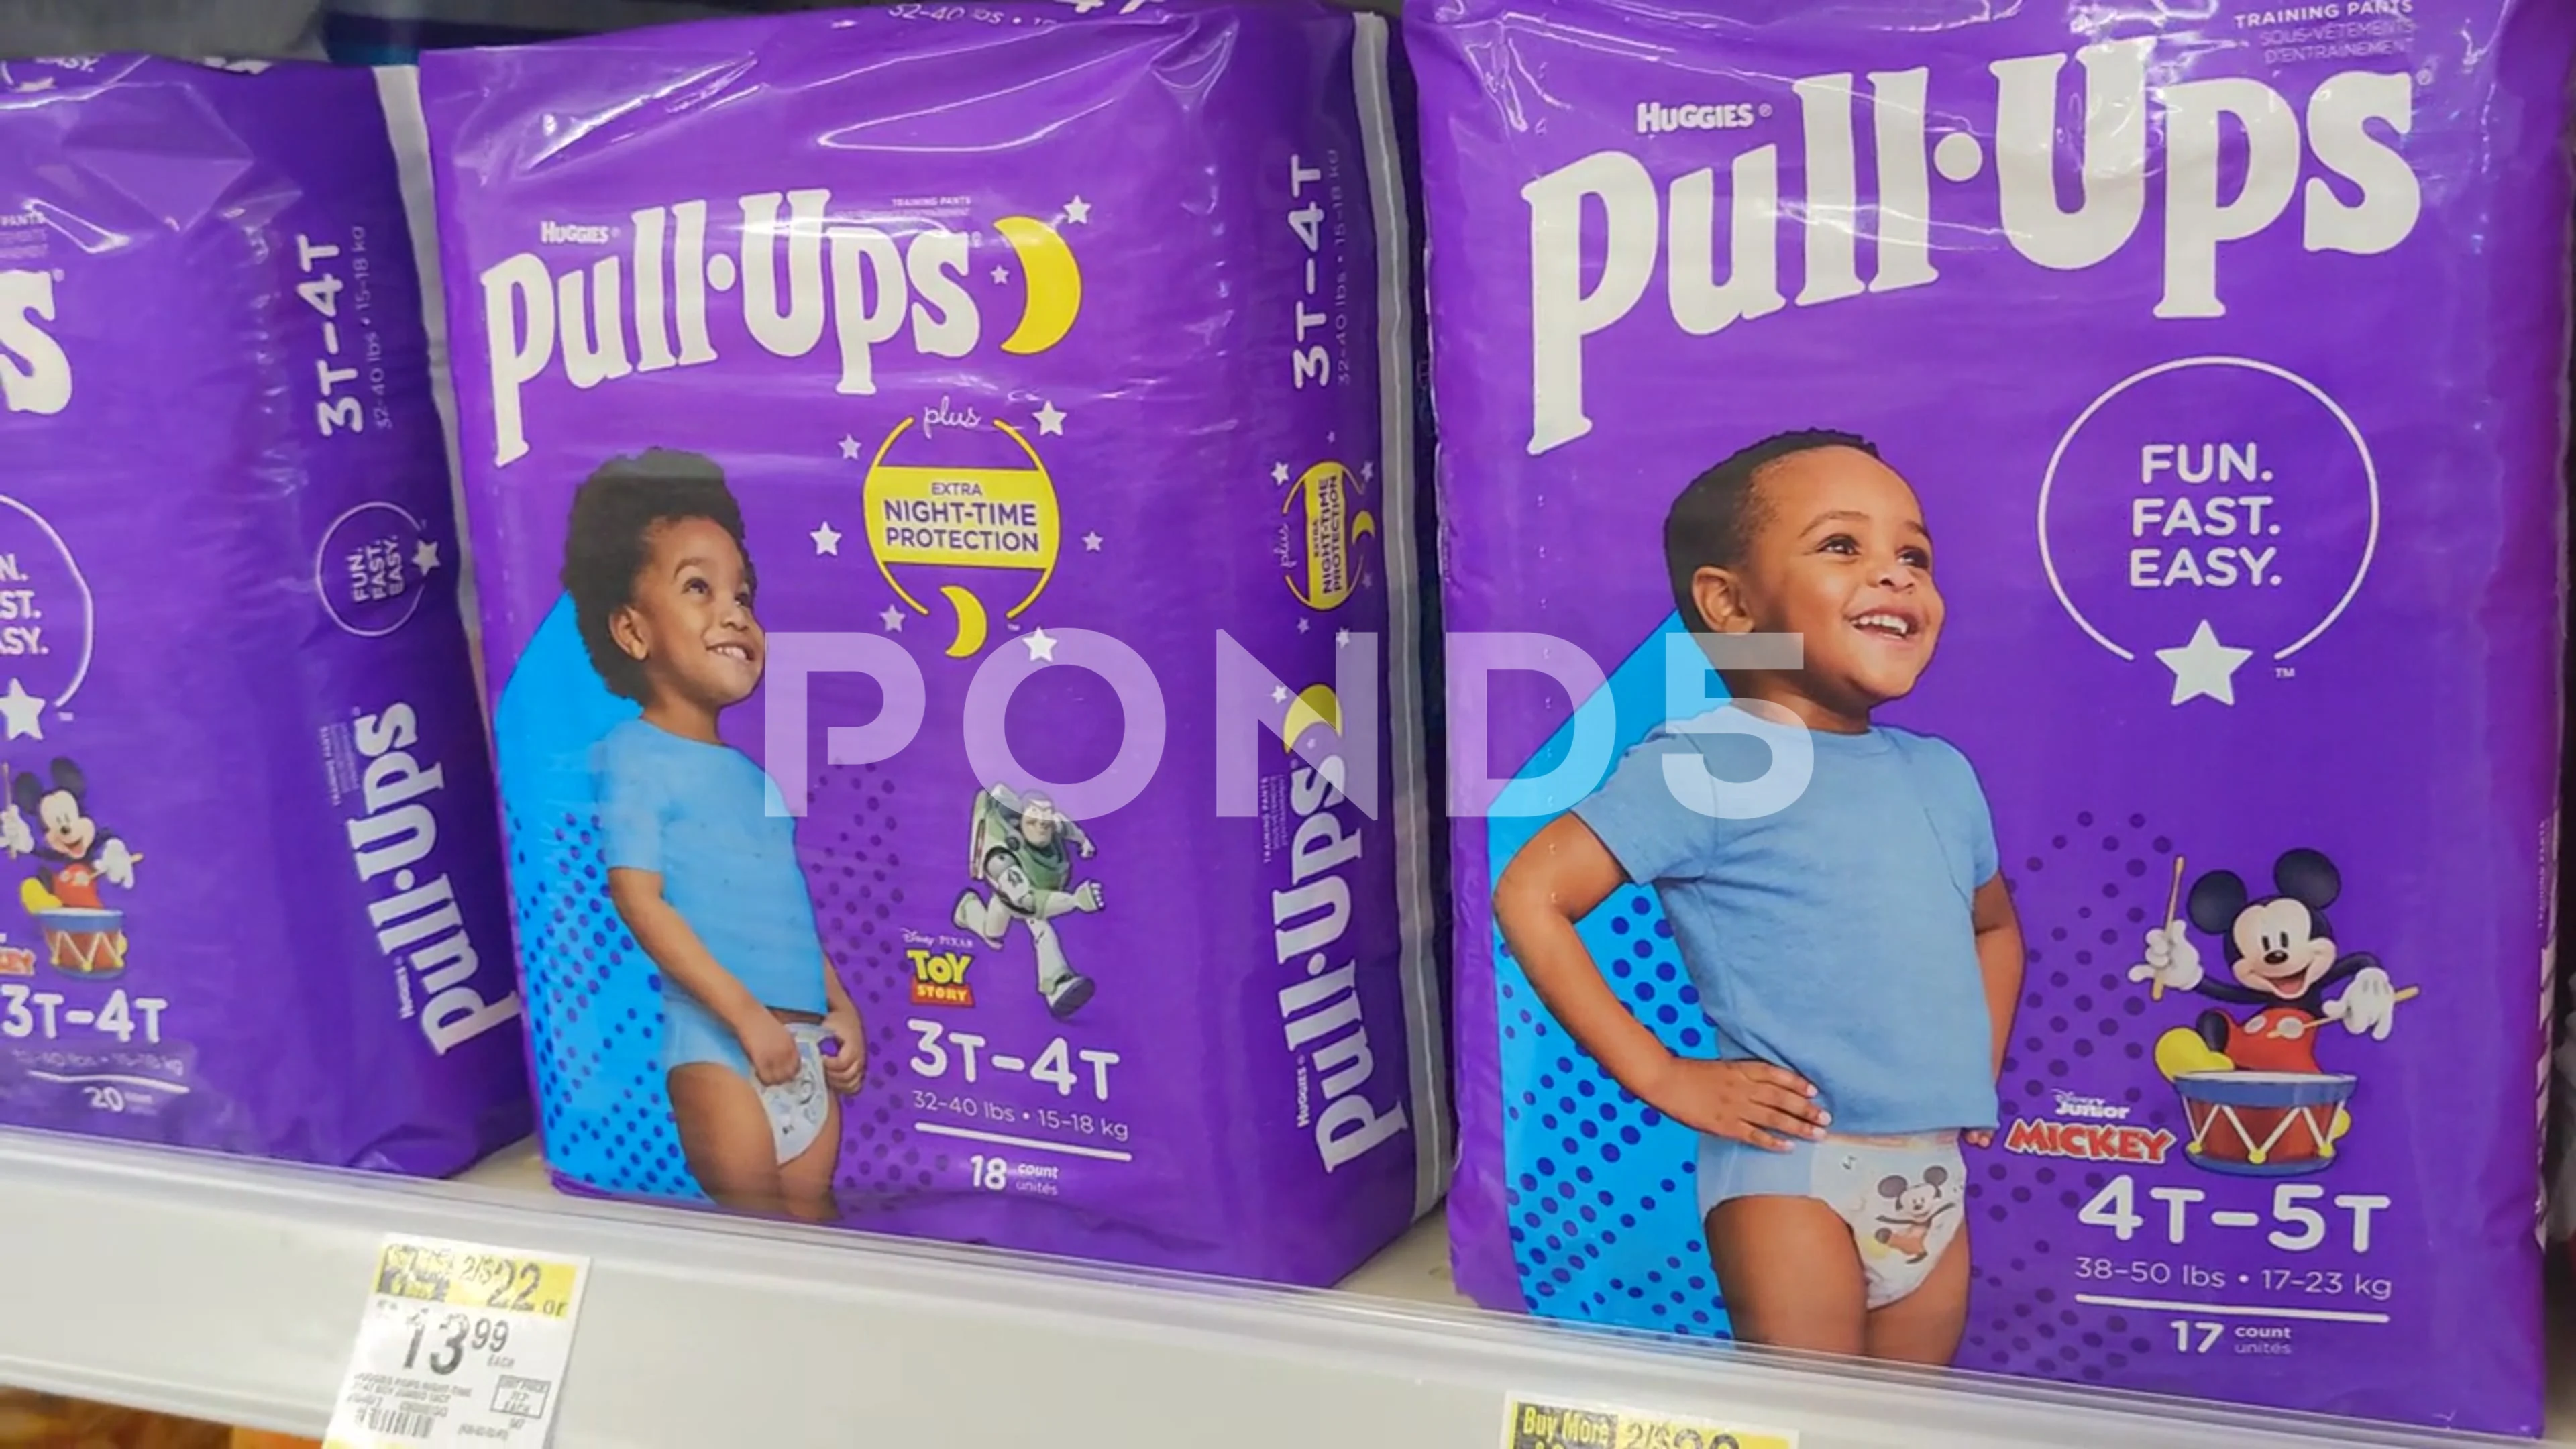 https://images.pond5.com/pull-ups-diapers-169578370_prevstill.jpeg